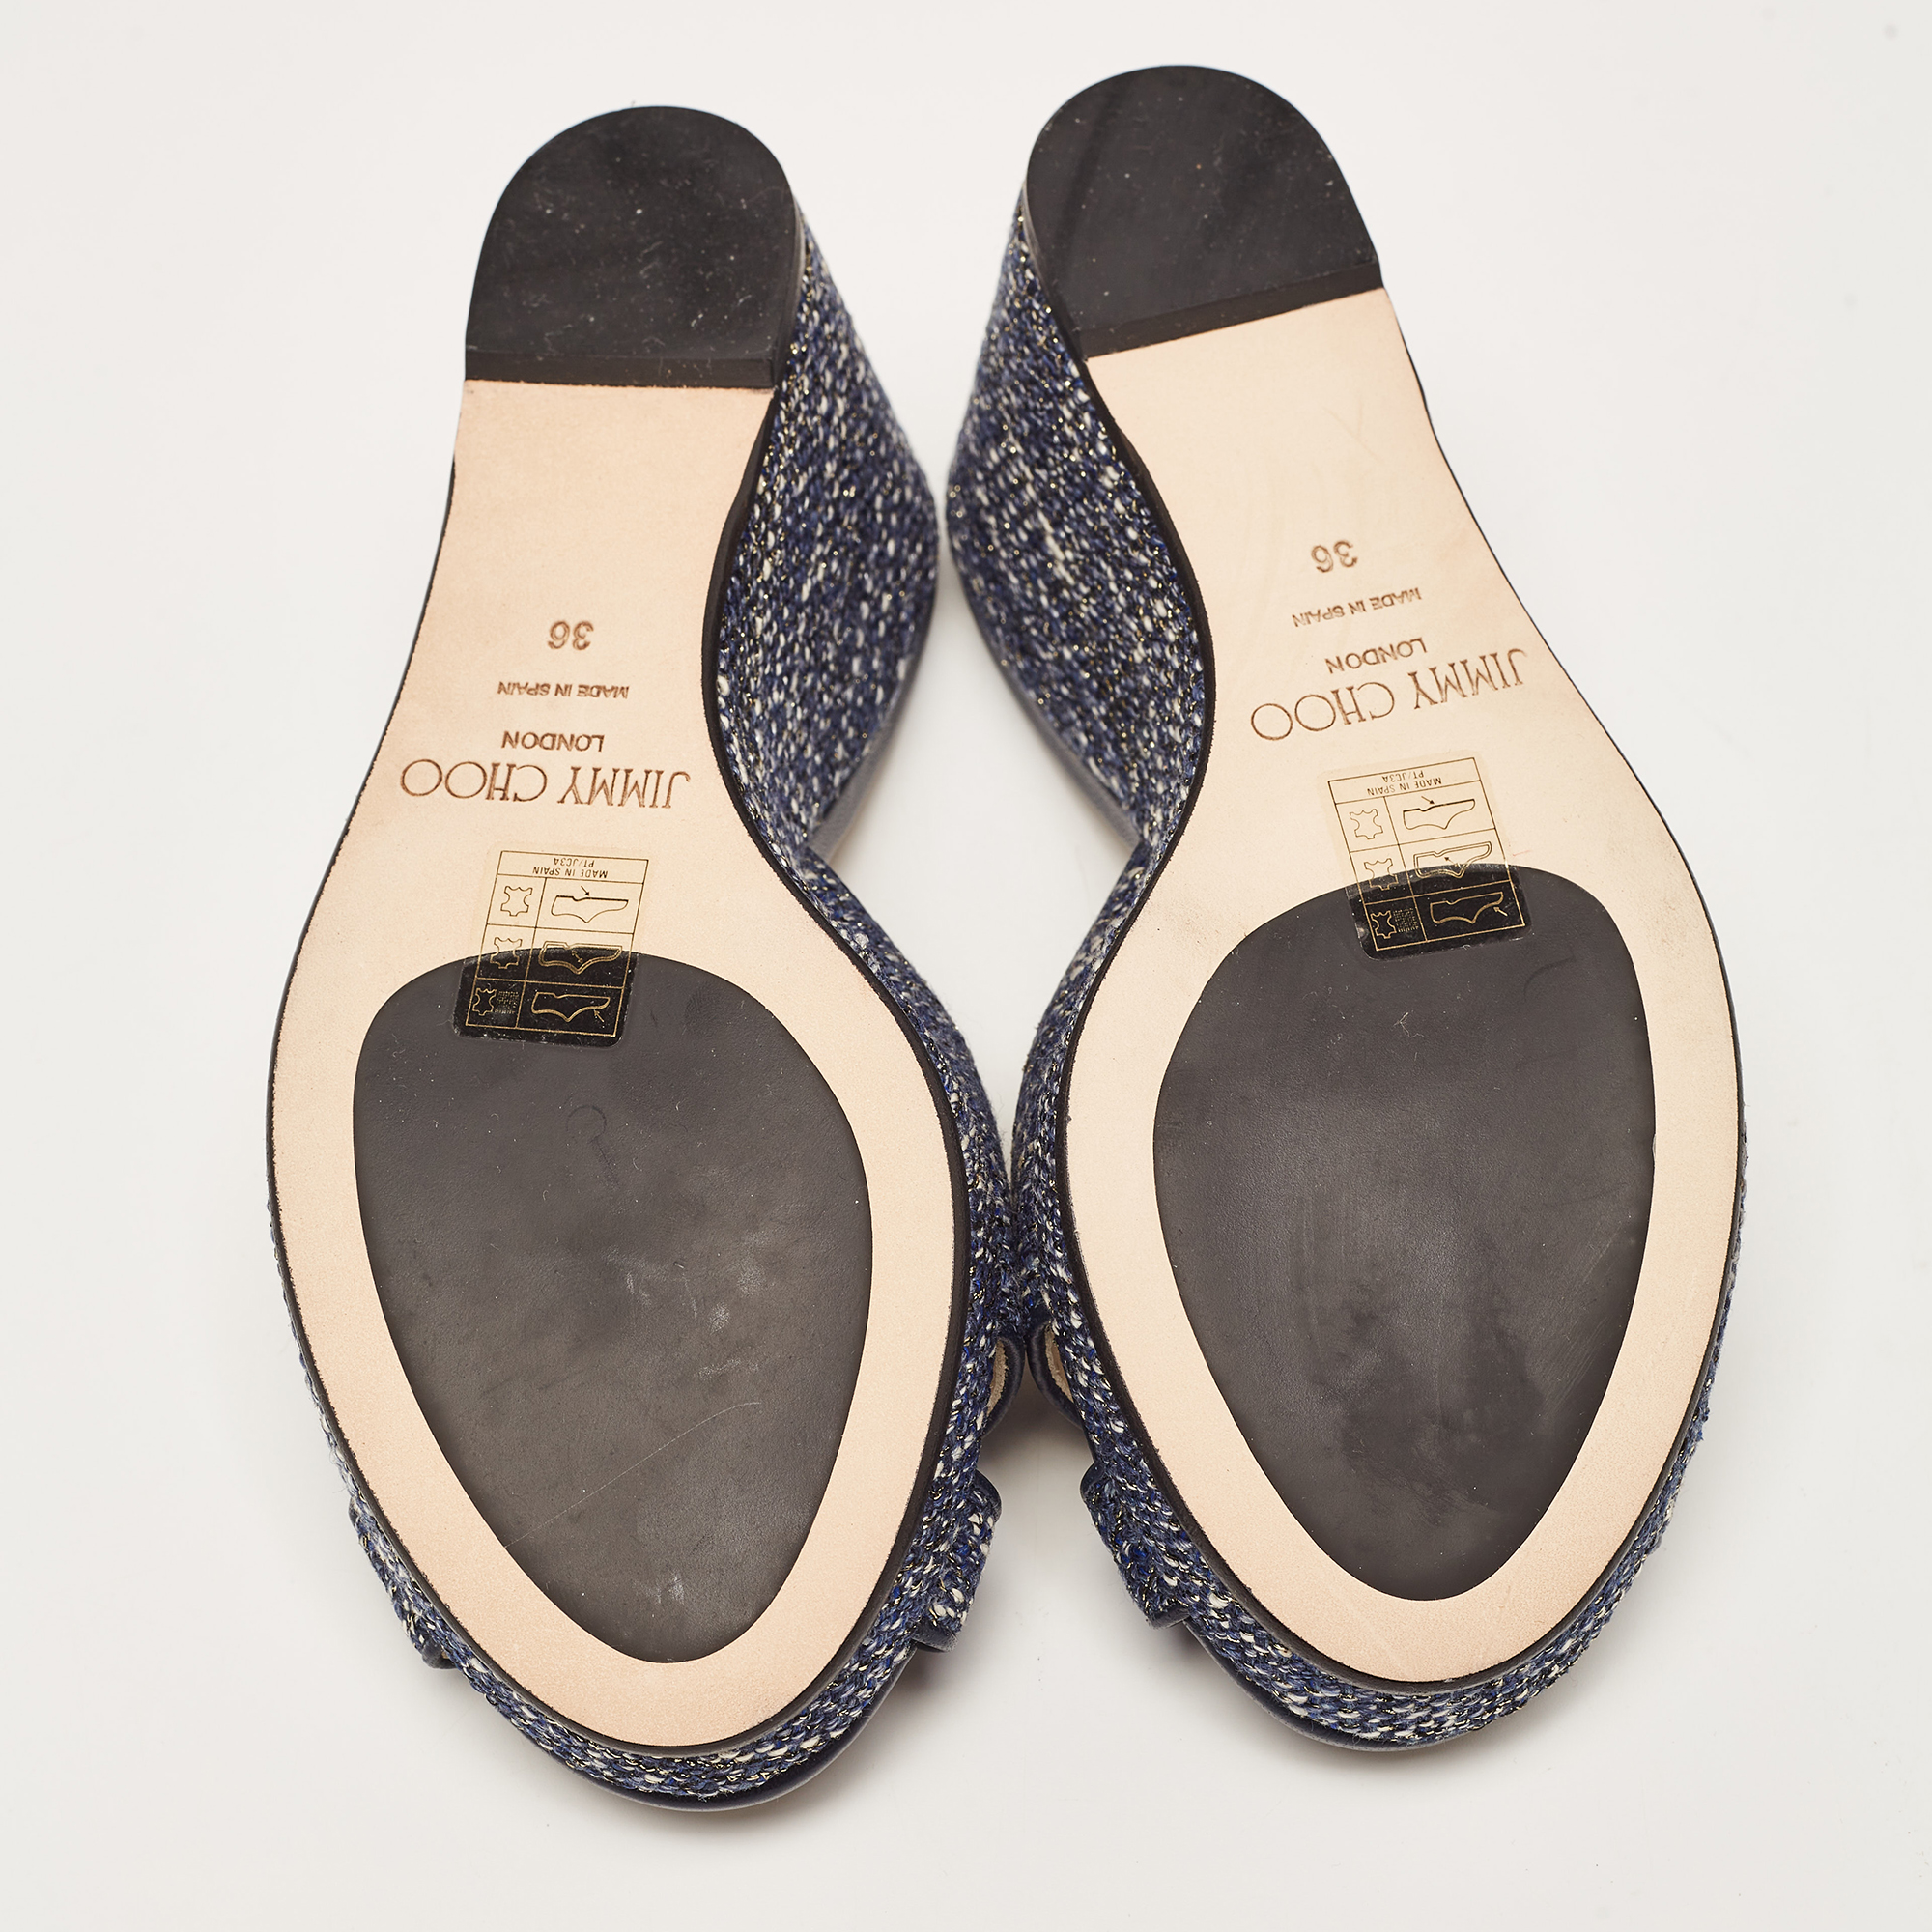 Jimmy Choo Navy Blue Tweed Almer Wedge Sandals Size 36